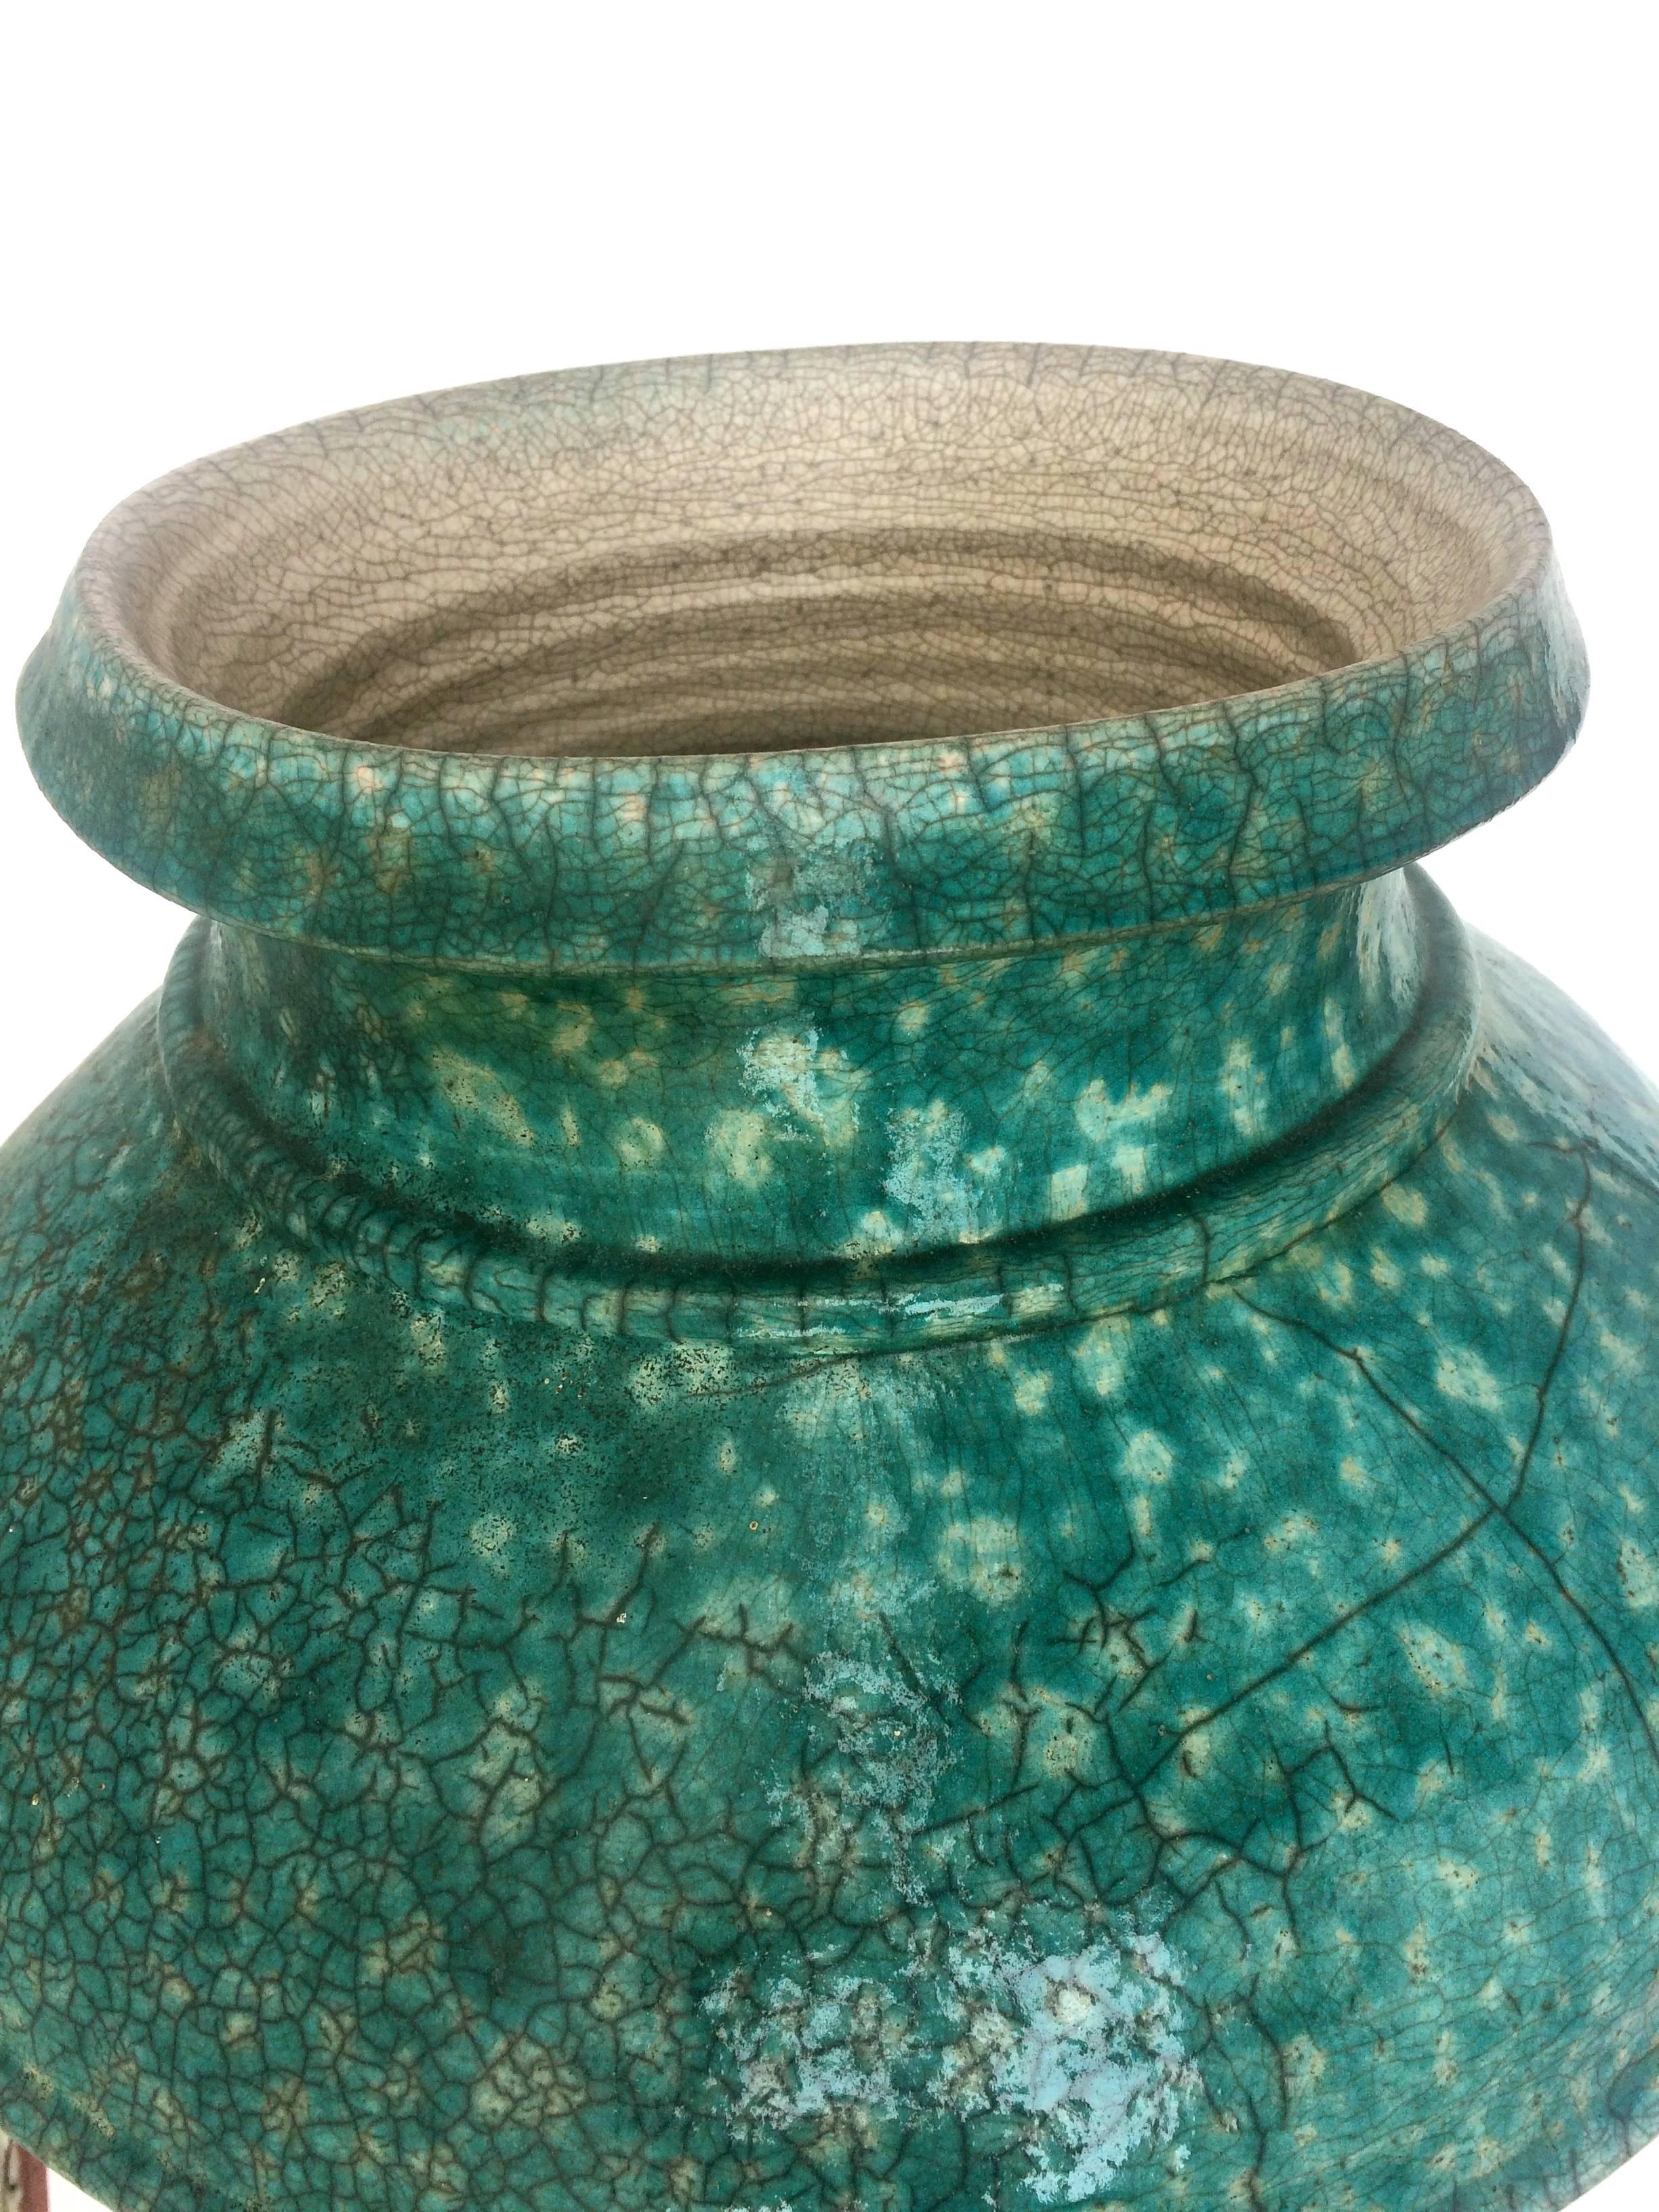 Large Turquoise Raku Pottery Floor Vase - Sculpture by Andrew Dewitt